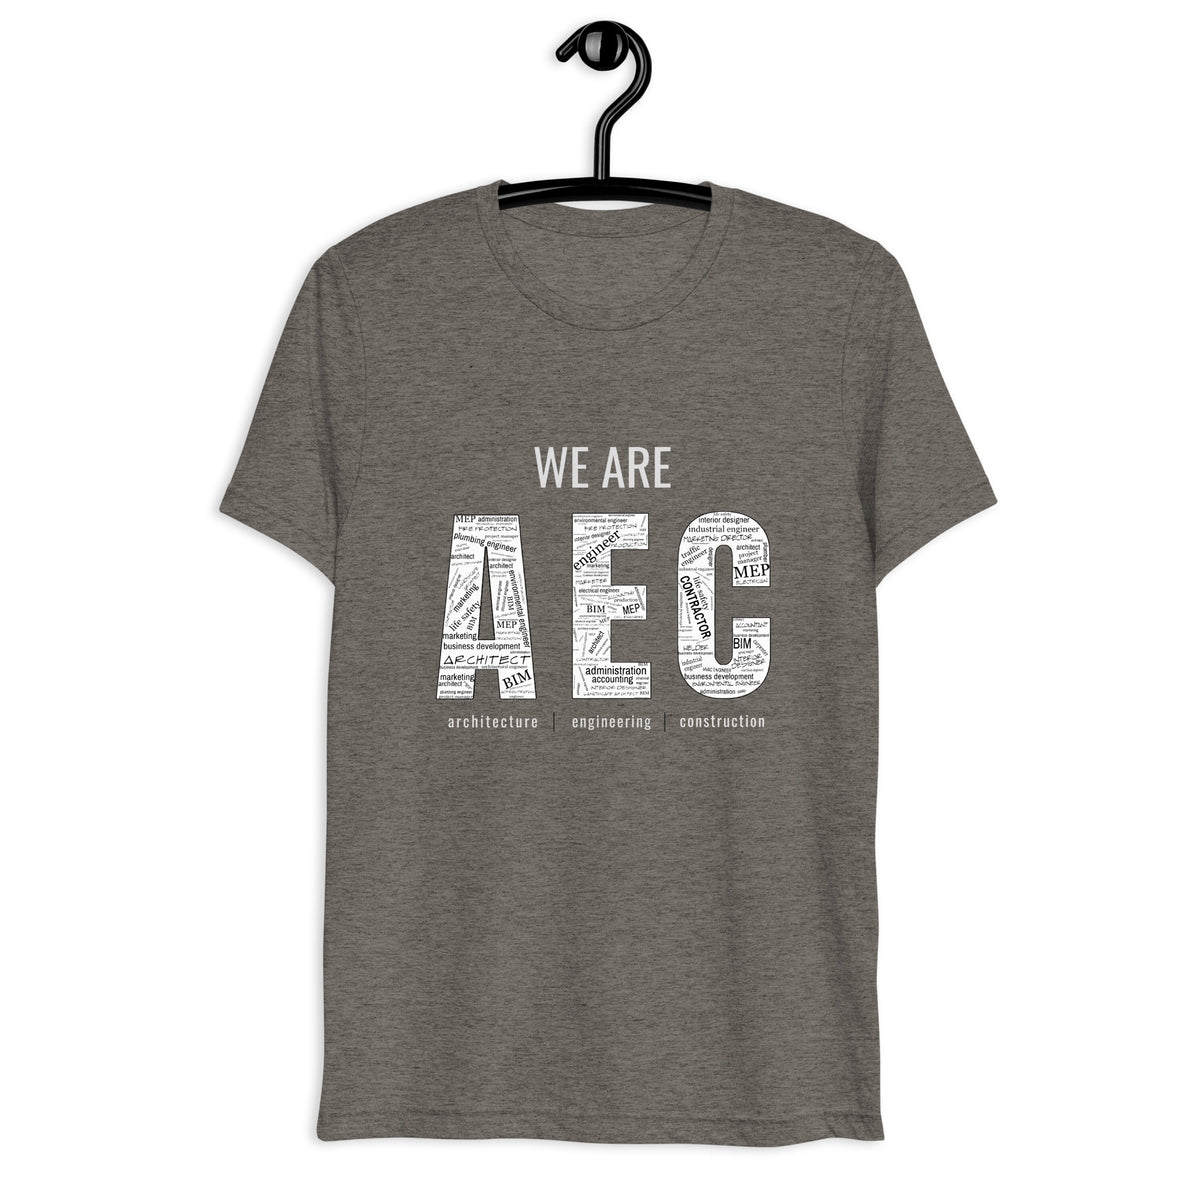 We are AEC | Senior Mechanical Piping Designer Cover